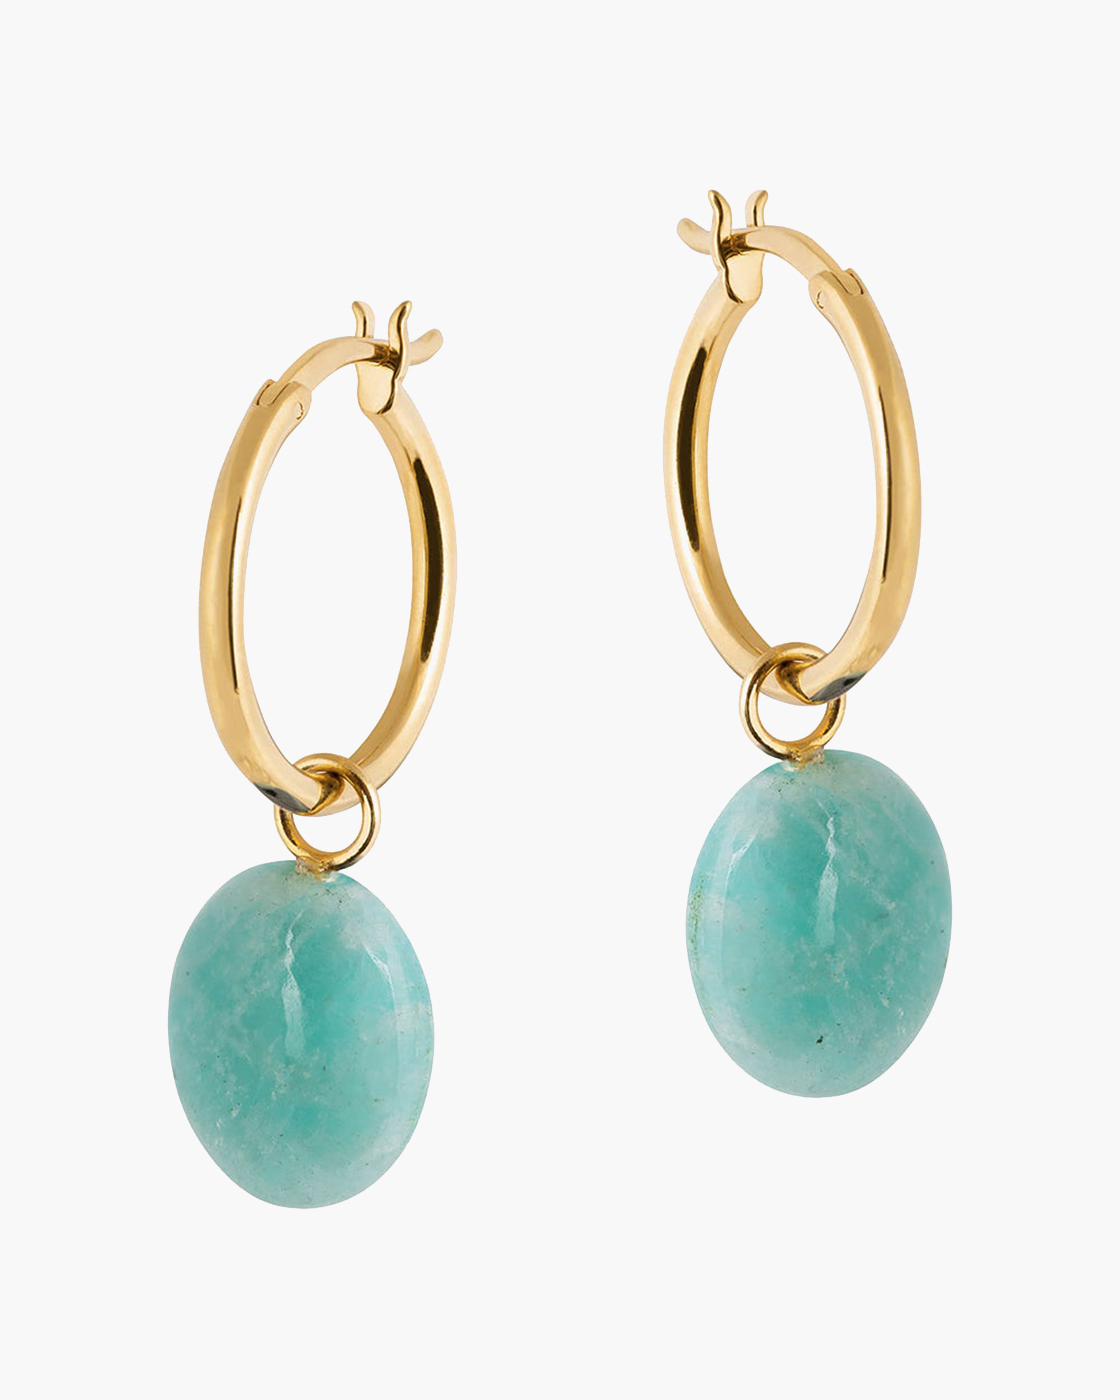 Eden Gold Hoop Earrings with Amazonite Charm